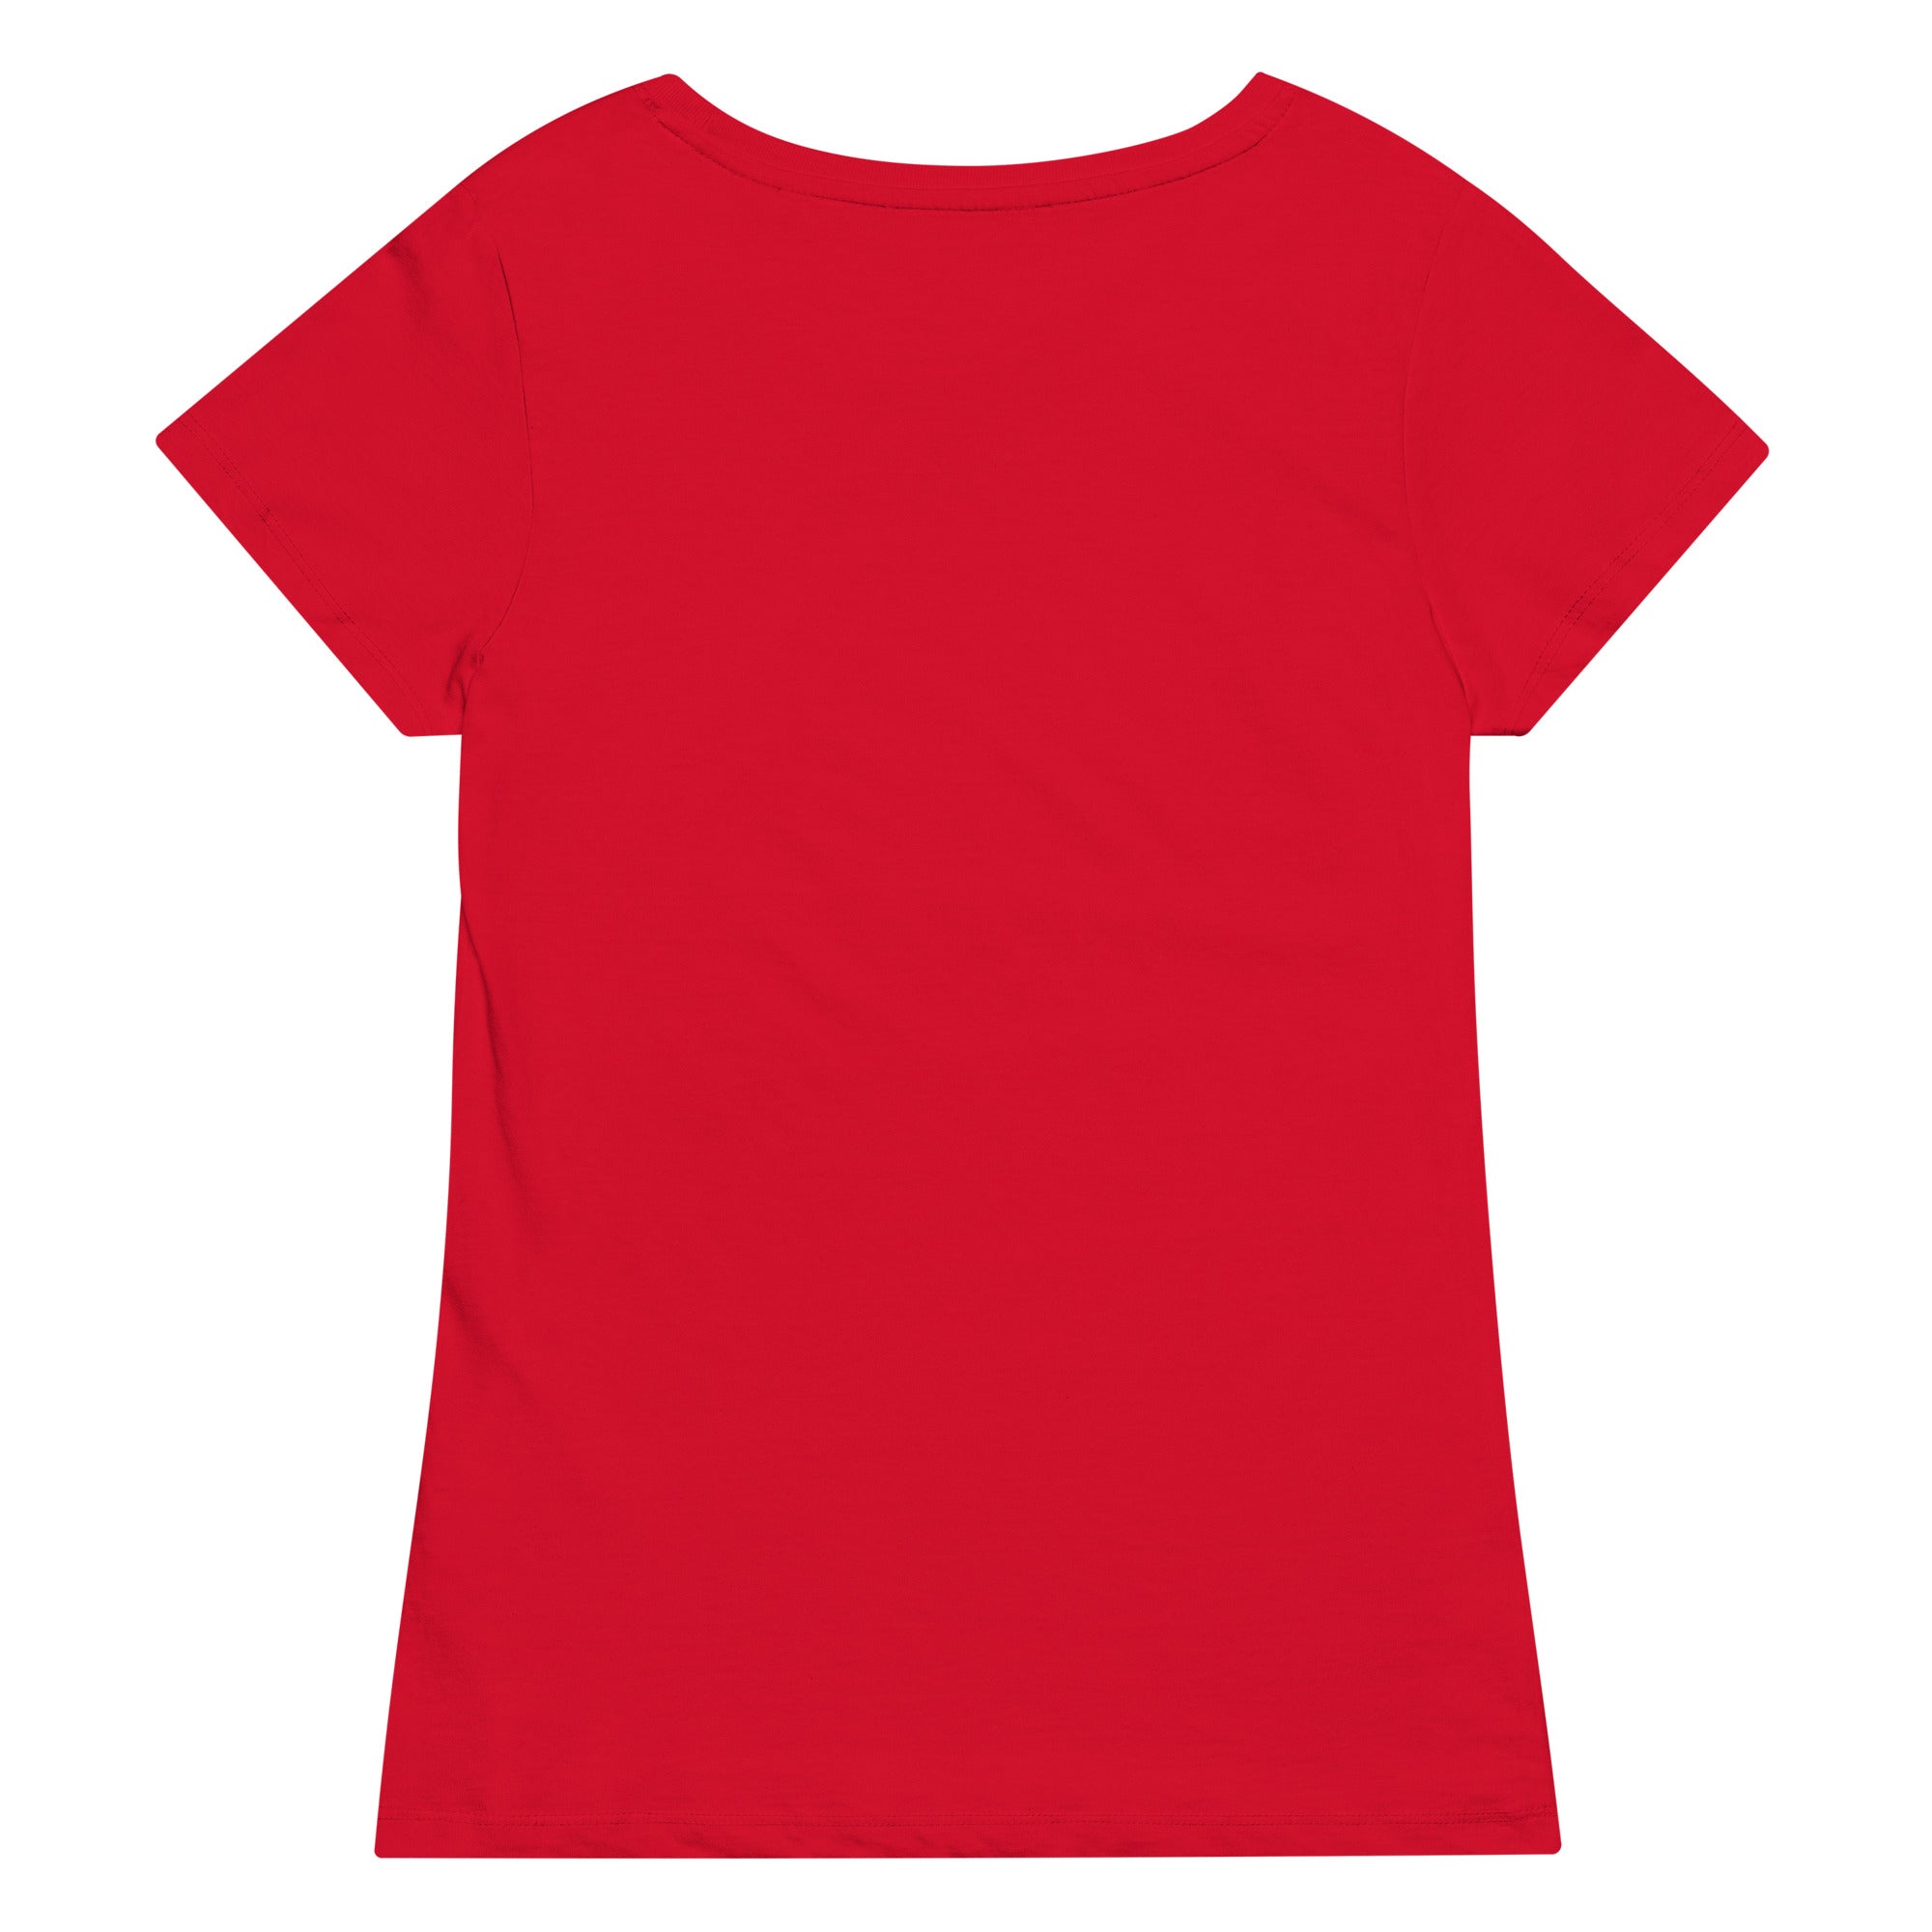 Vintage Style 70s Elton John Mono Line Art Sketch - Premium Printed Unisex organic cotton women's fitted t-shirt (deep red print)